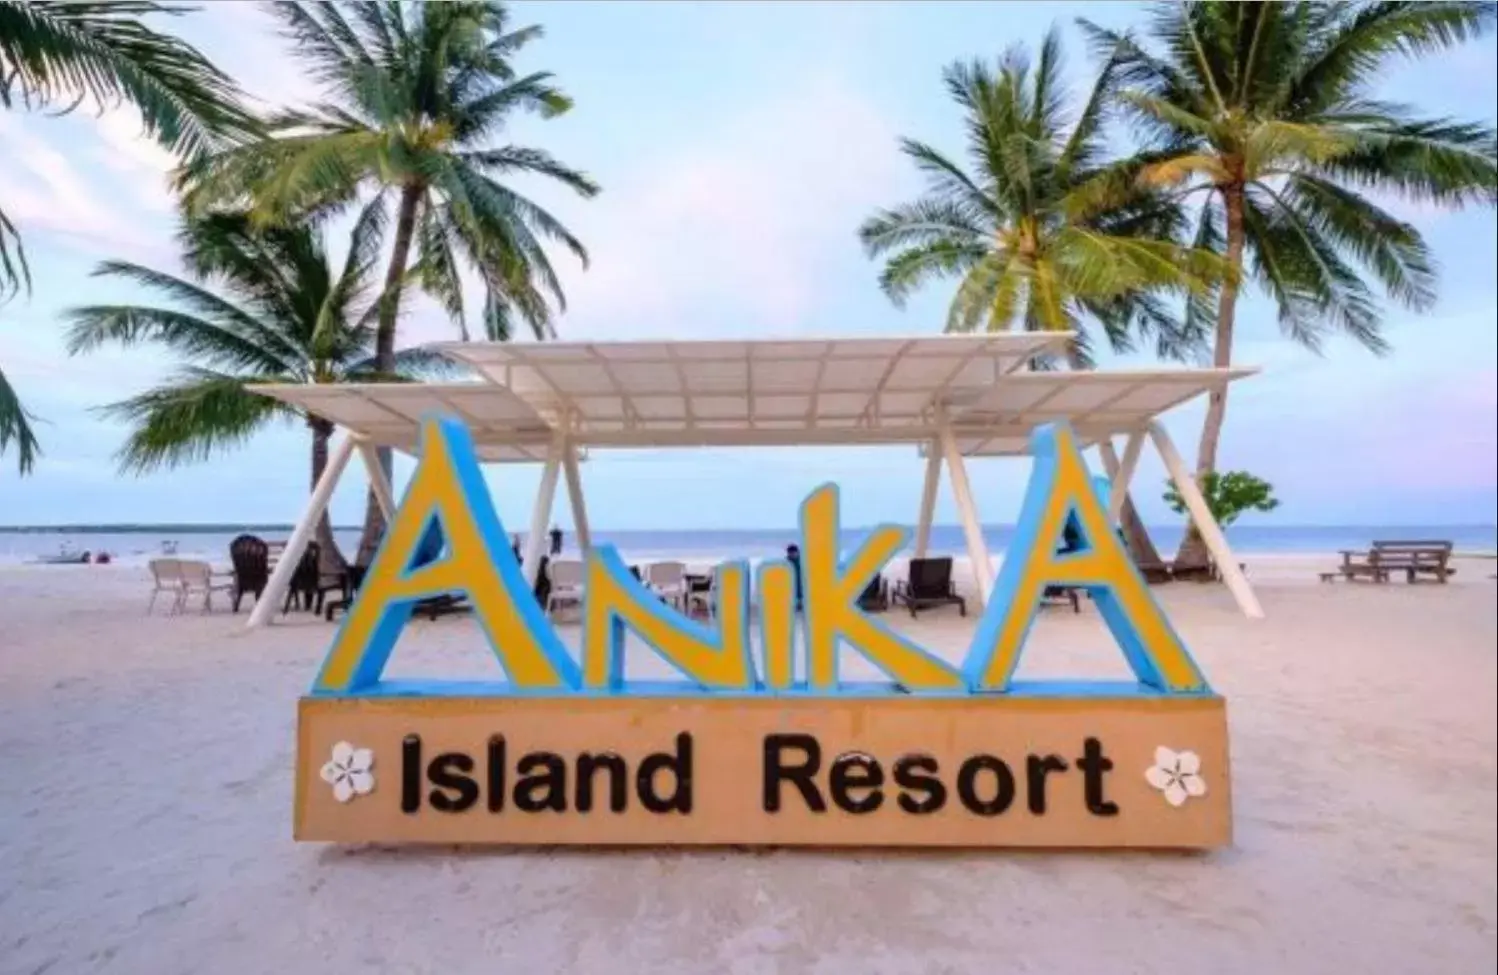 Property logo or sign in Anika Island Resort